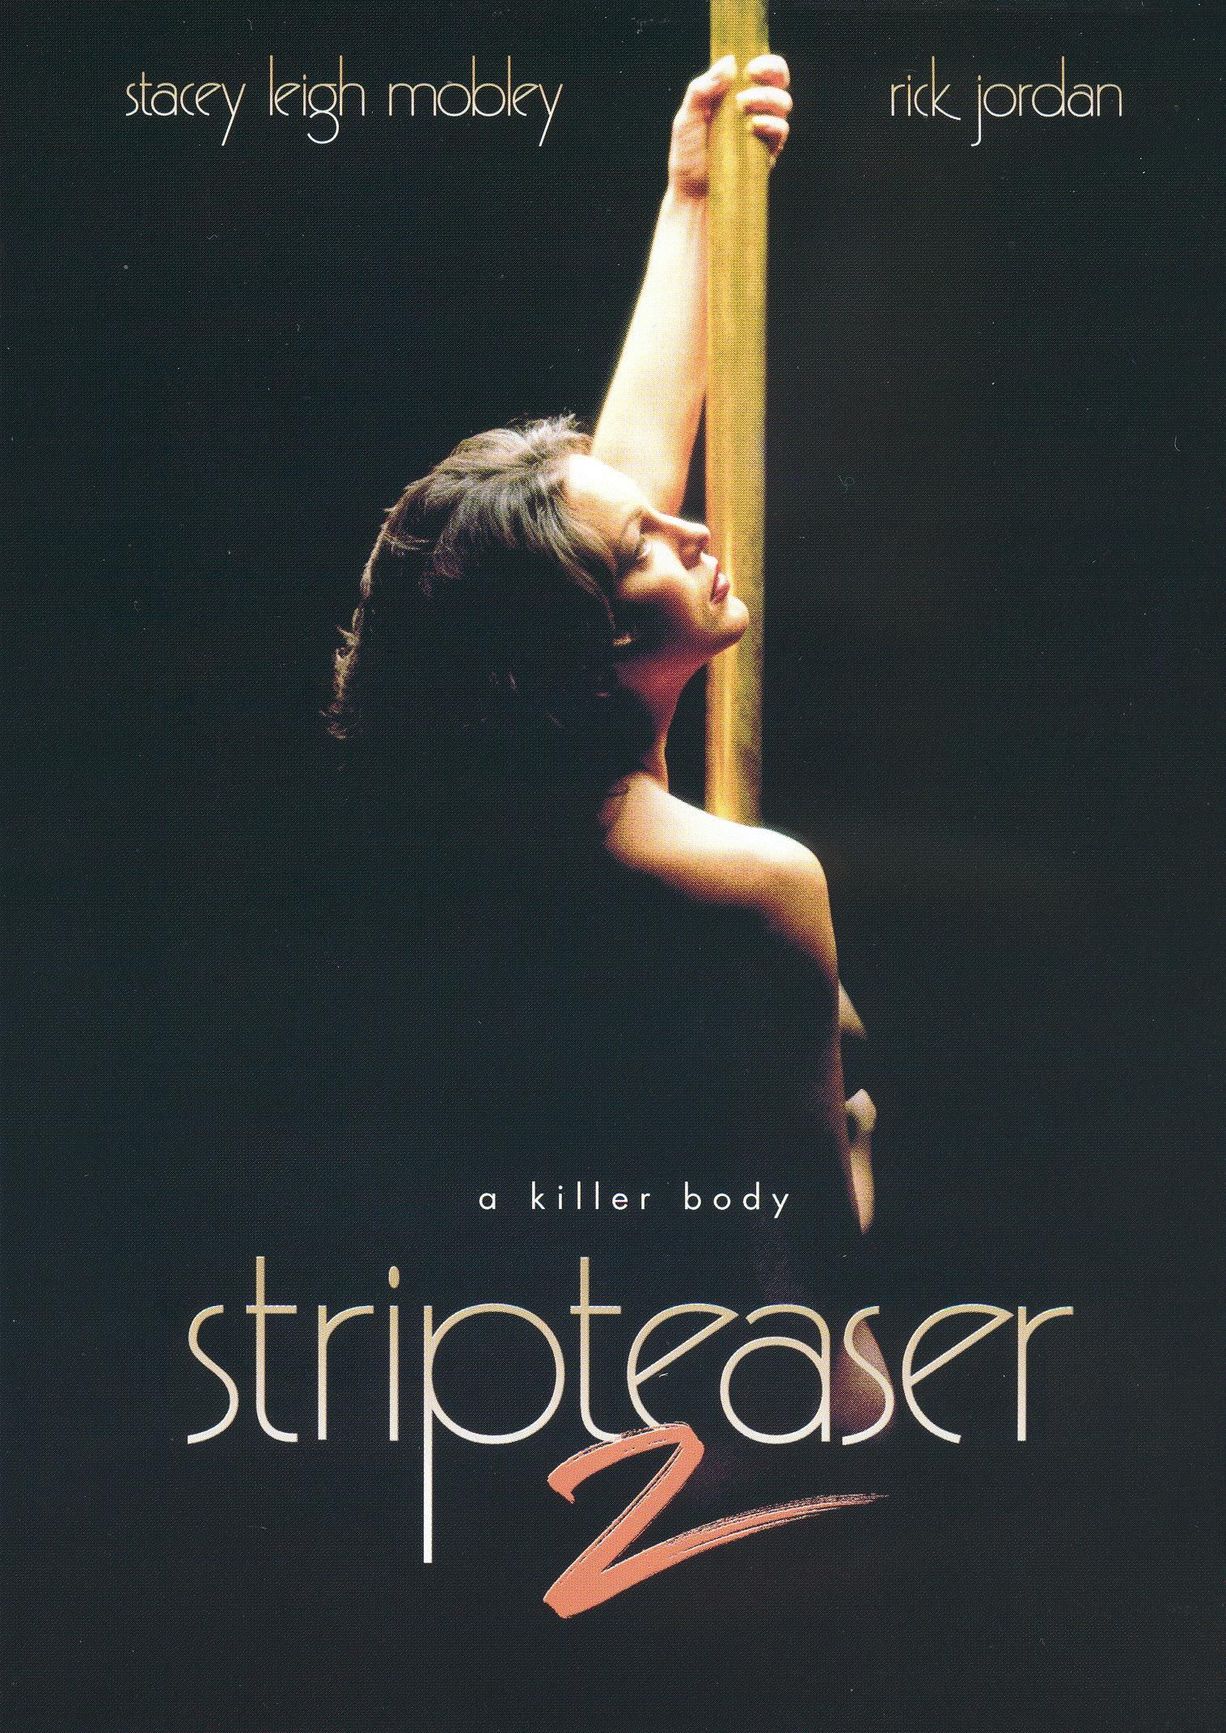 Stripteaser II (1997) Screenshot 1 